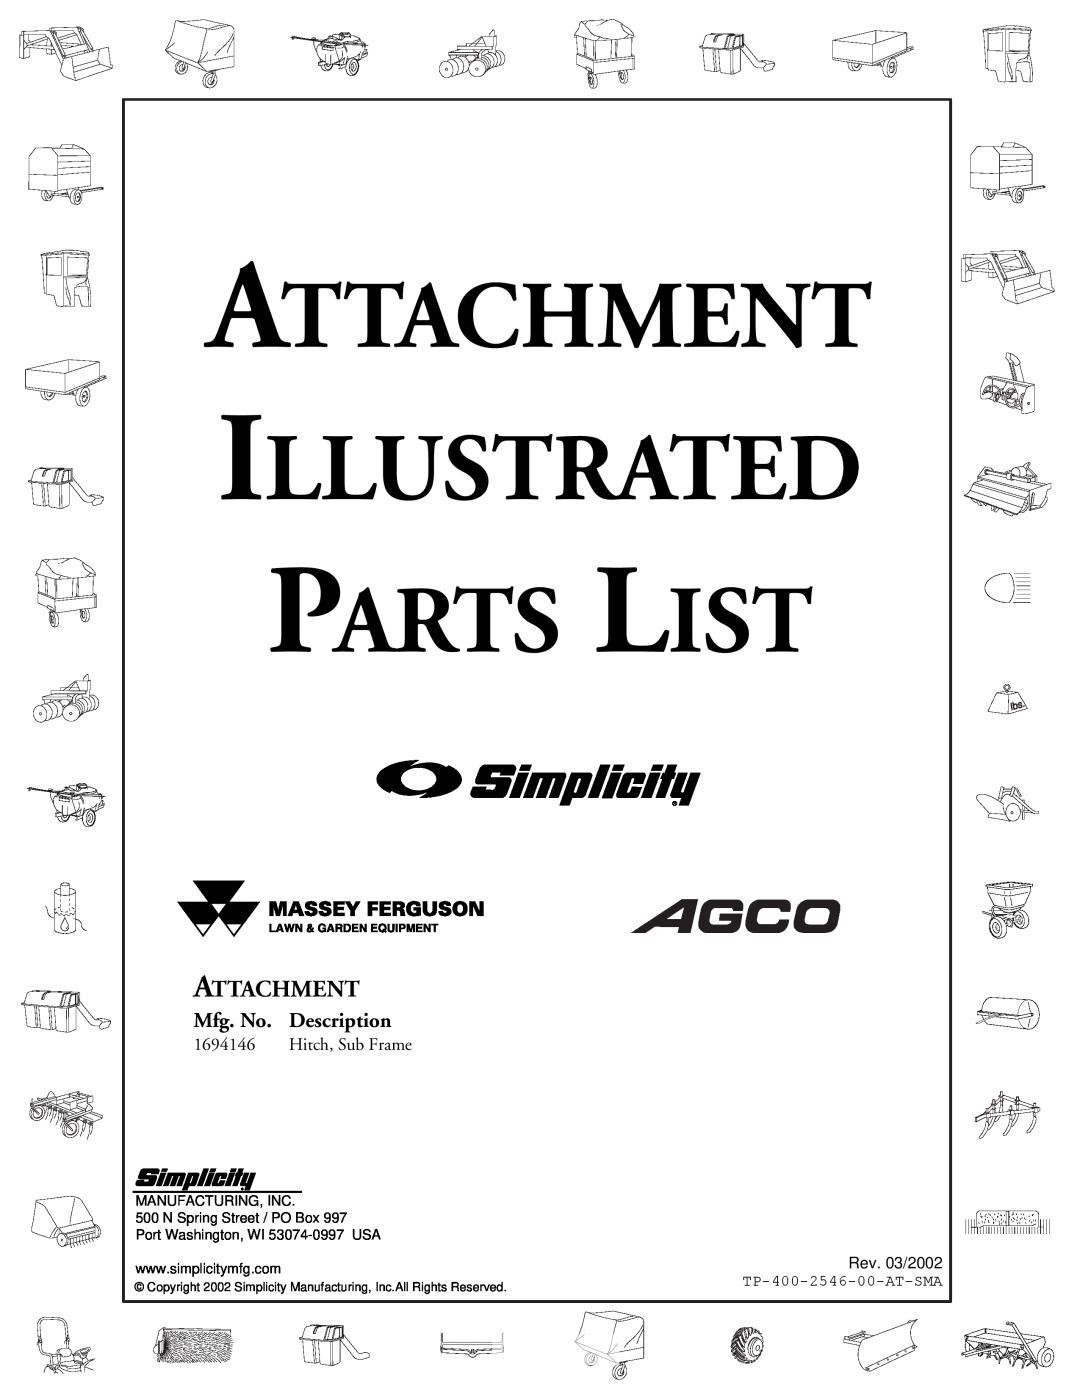 Simplicity 1694146 manual Attachment Illustrated Parts List, Mfg. No. Description, Hitch, Sub Frame, Rev. 03/2002 